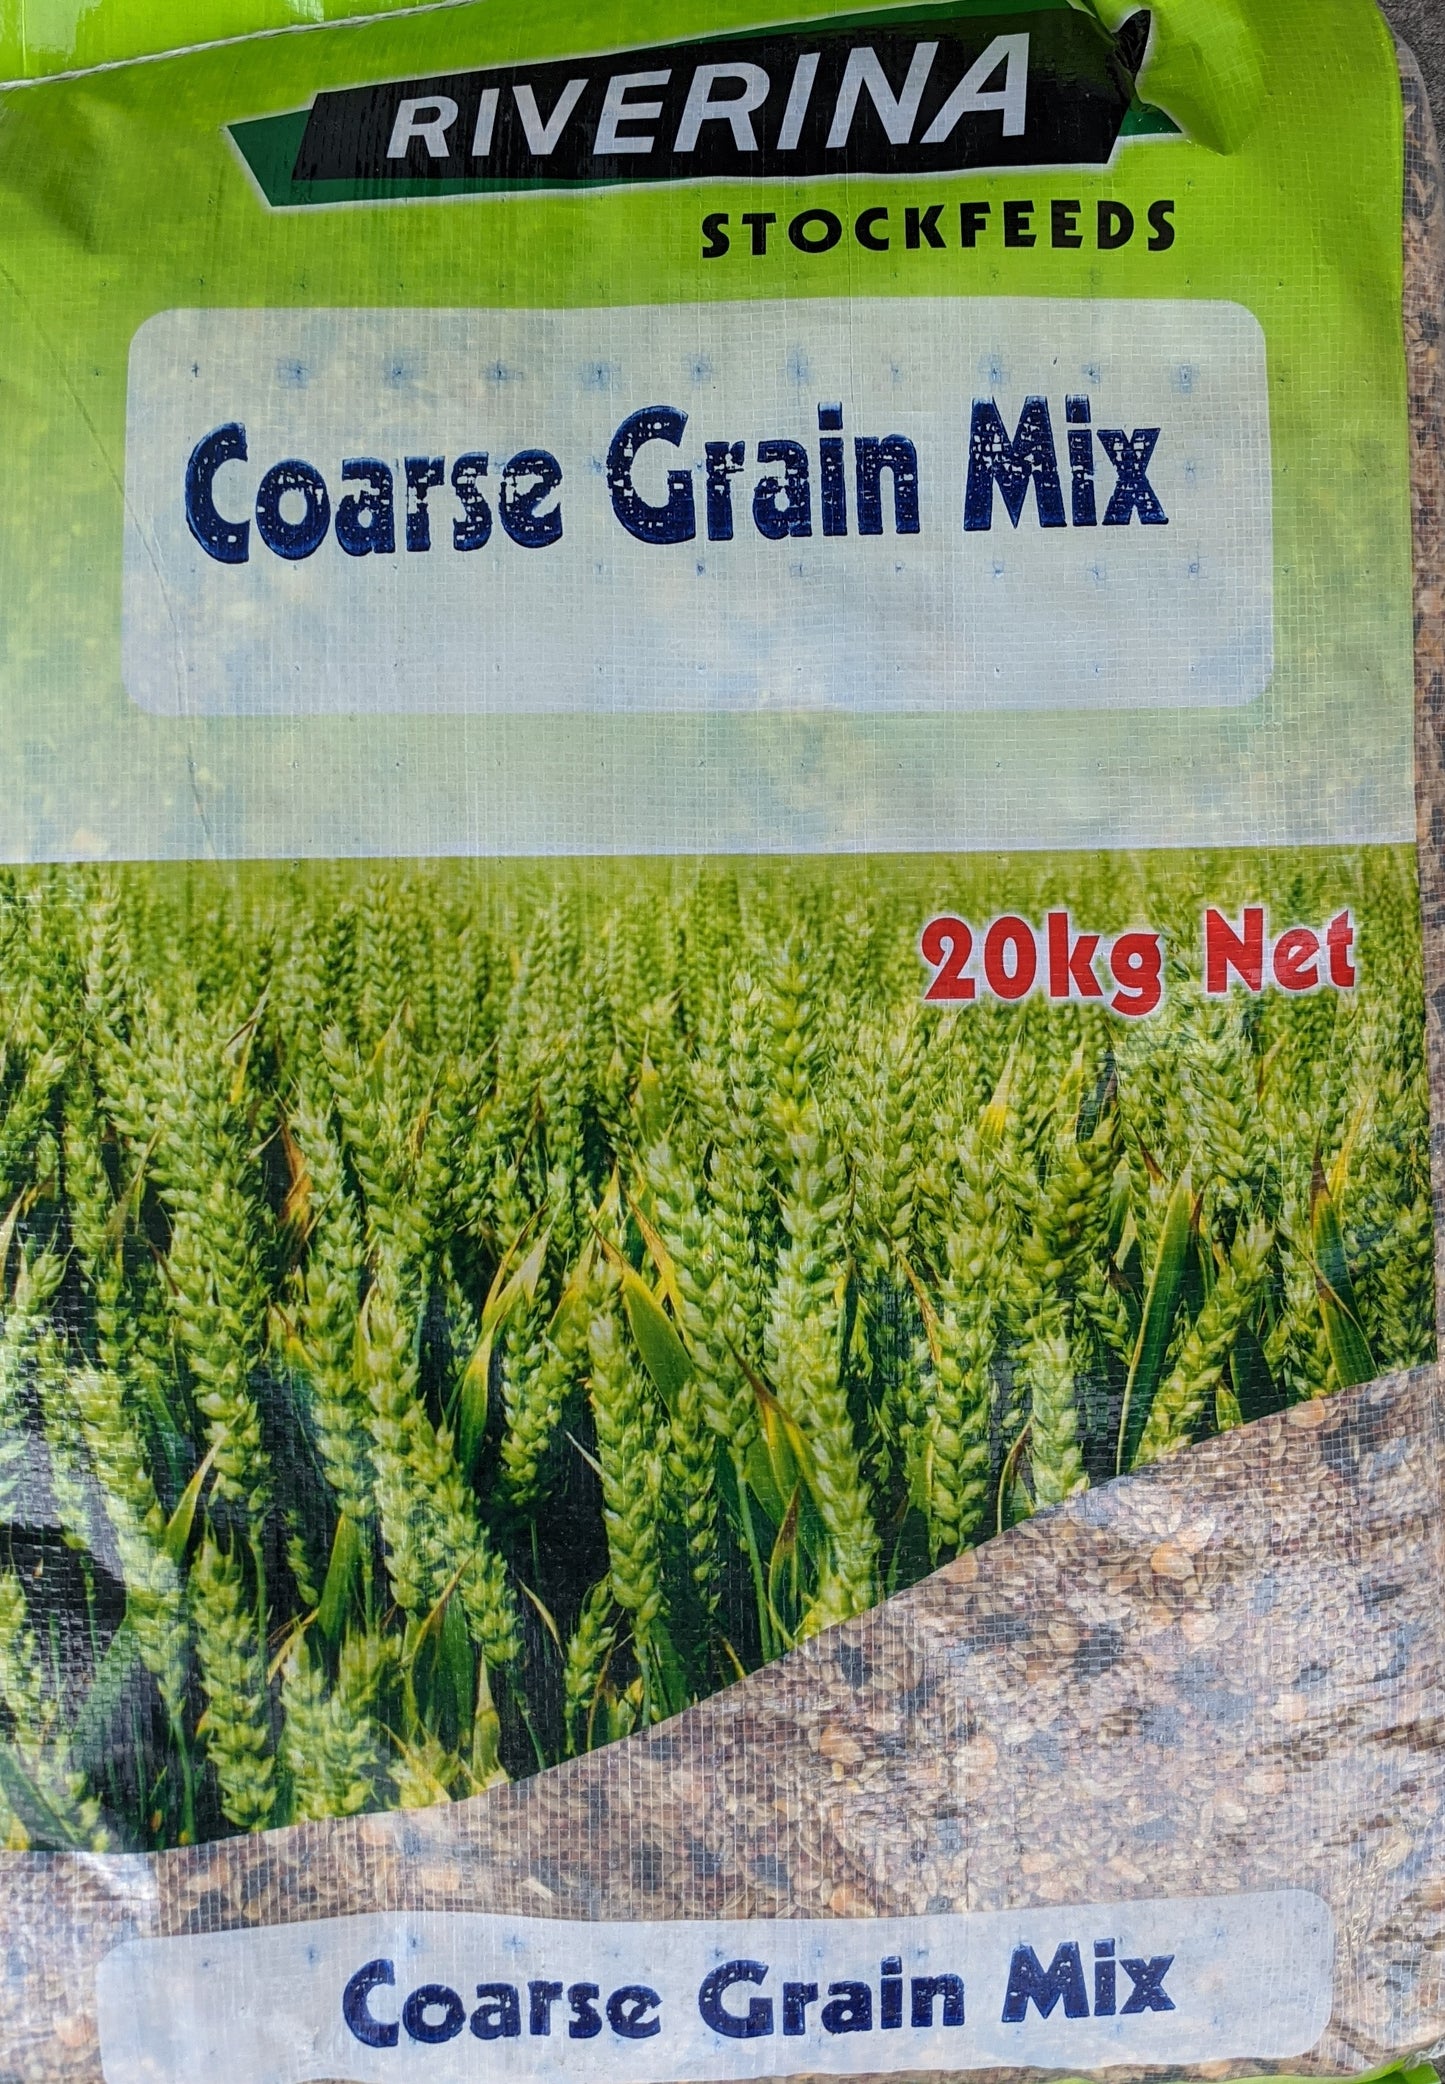 Riverina Coarse Grain Mix 20kg at Buckhams General Produce